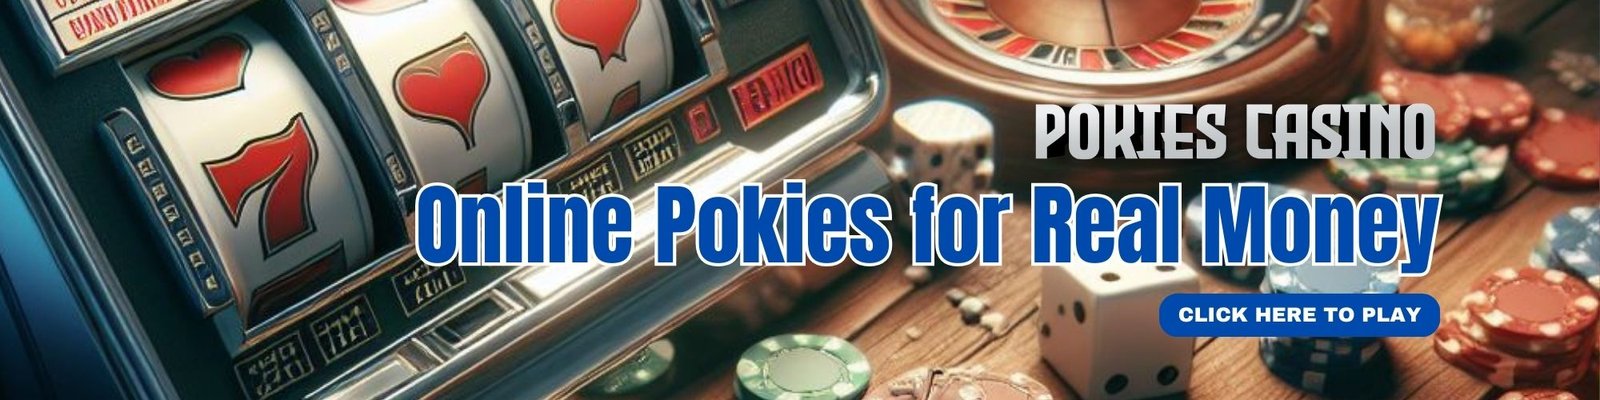 Online Pokies for Real Money in PokiesCasino